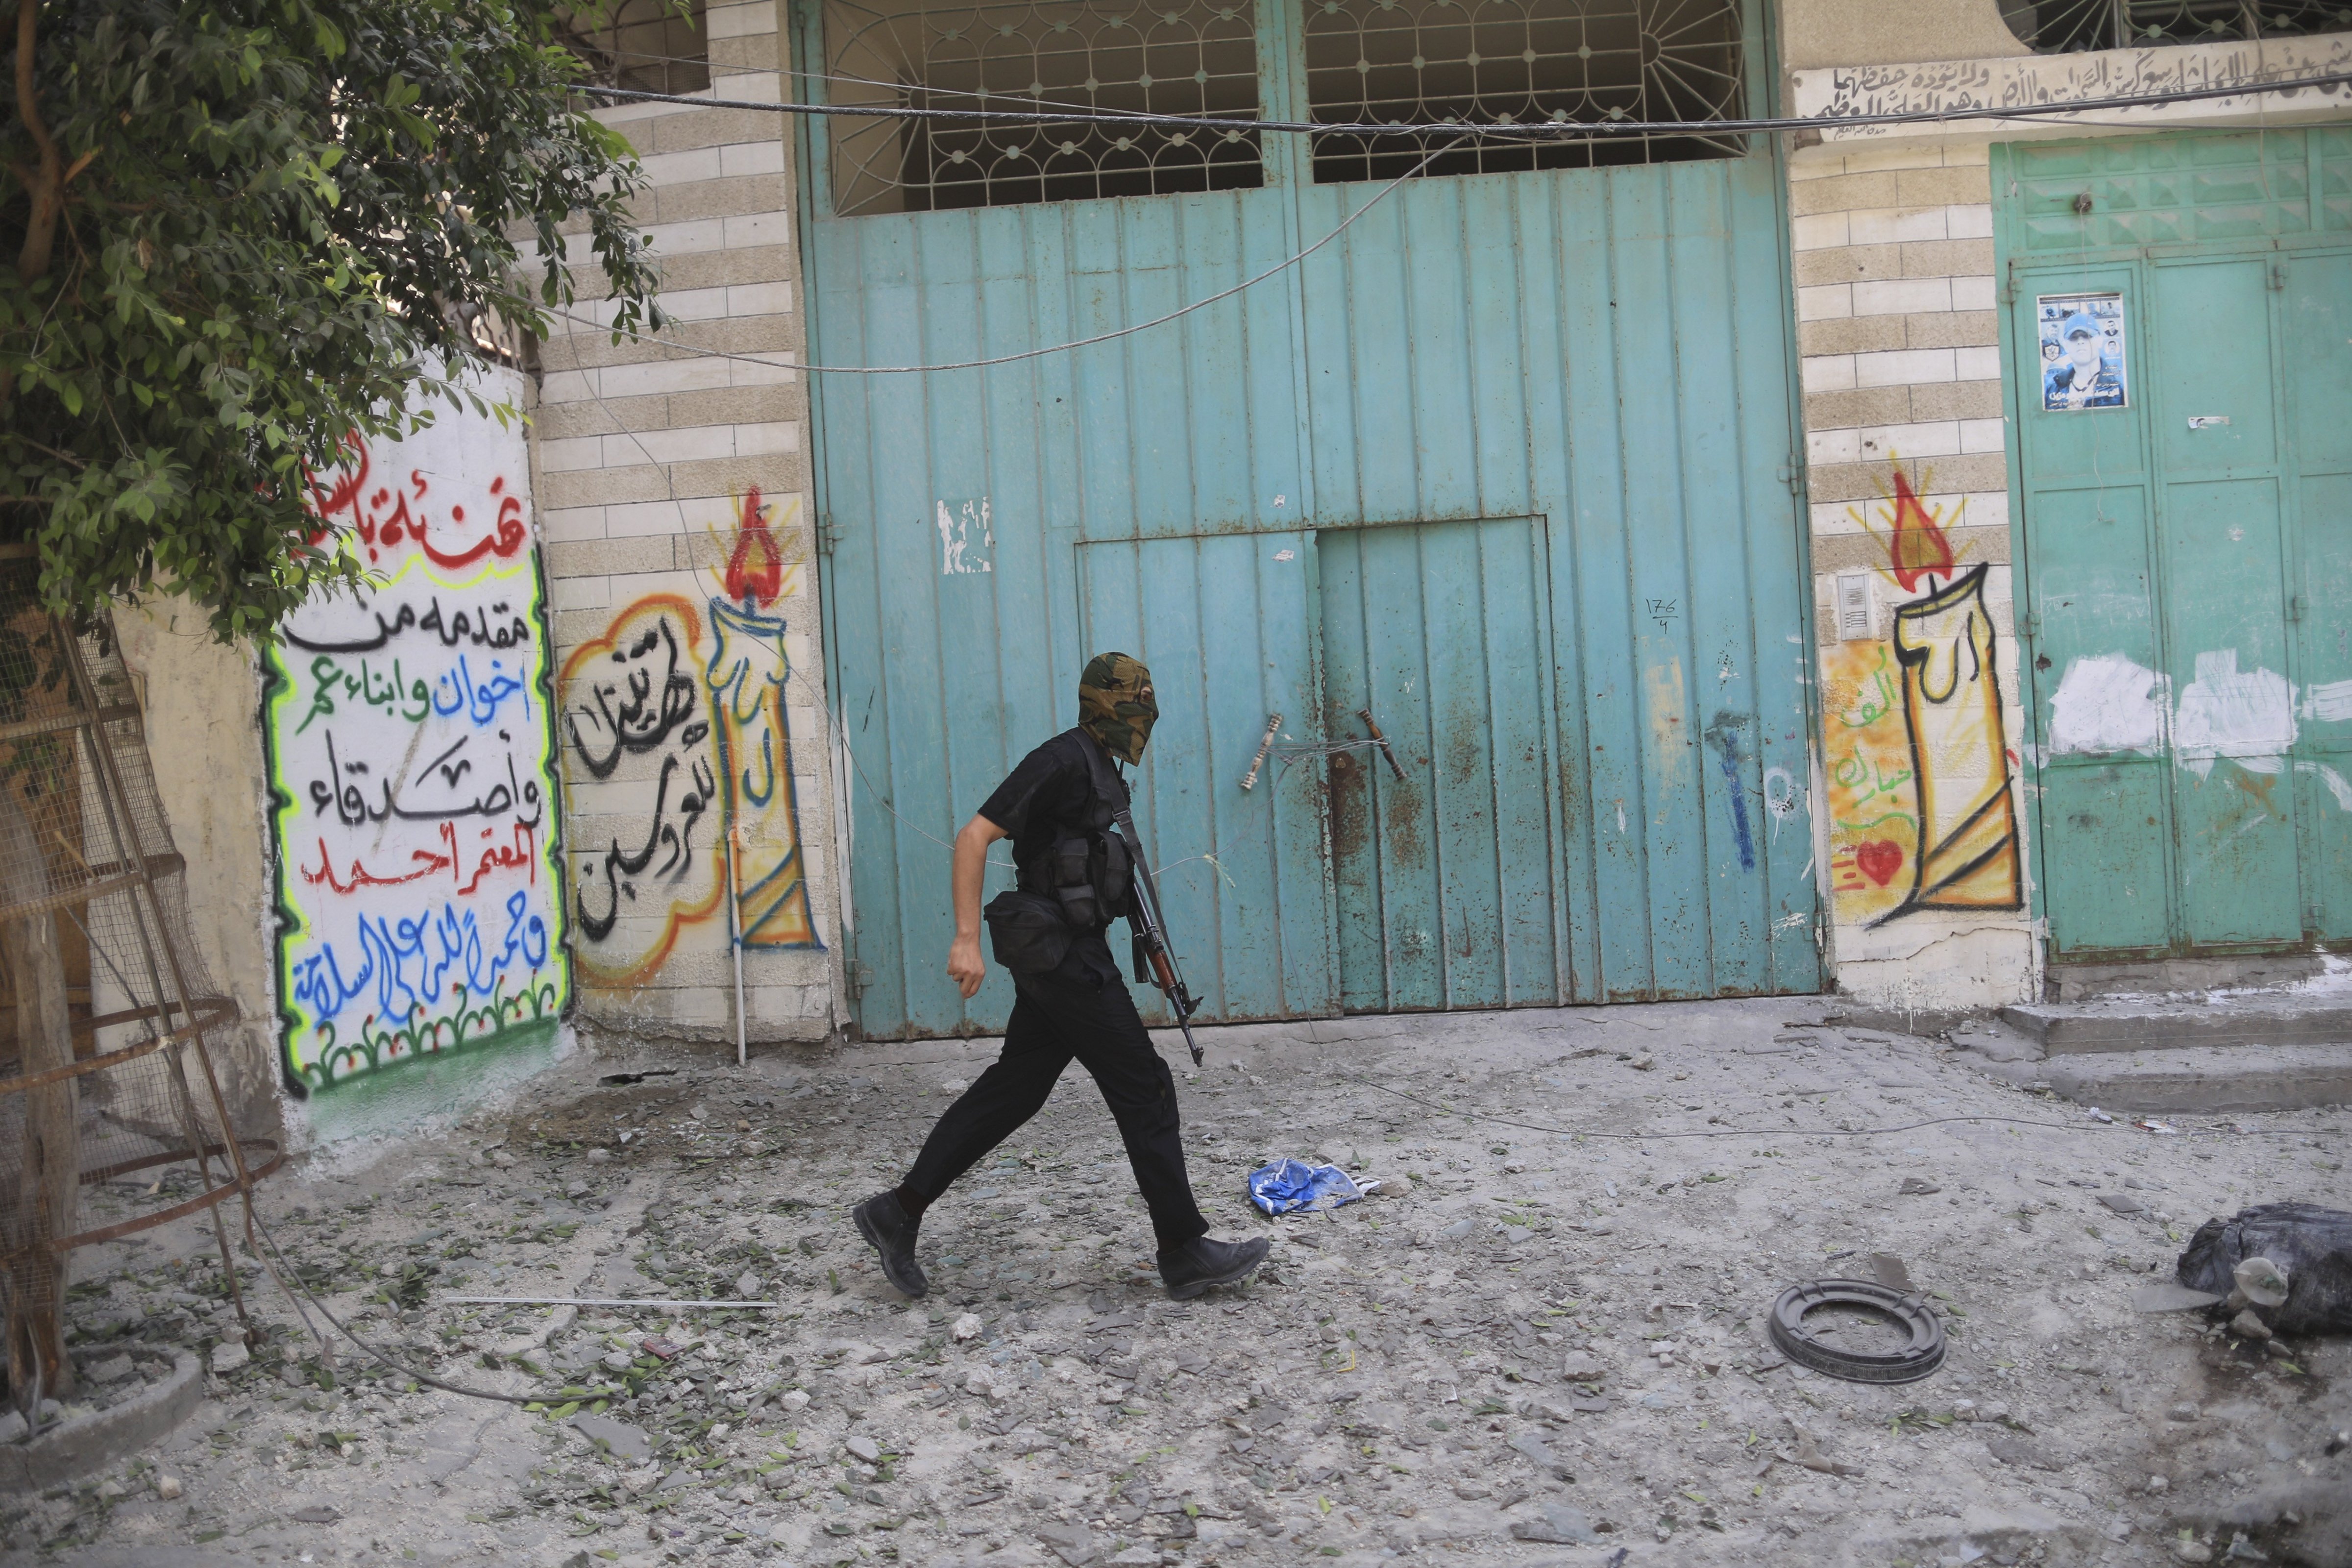 An armed Hamas militant walks through a street in the Shejaiya neighborhood of Gaza City on July 20, 2014. (Wissam Nassar—The New York Times/Redux)